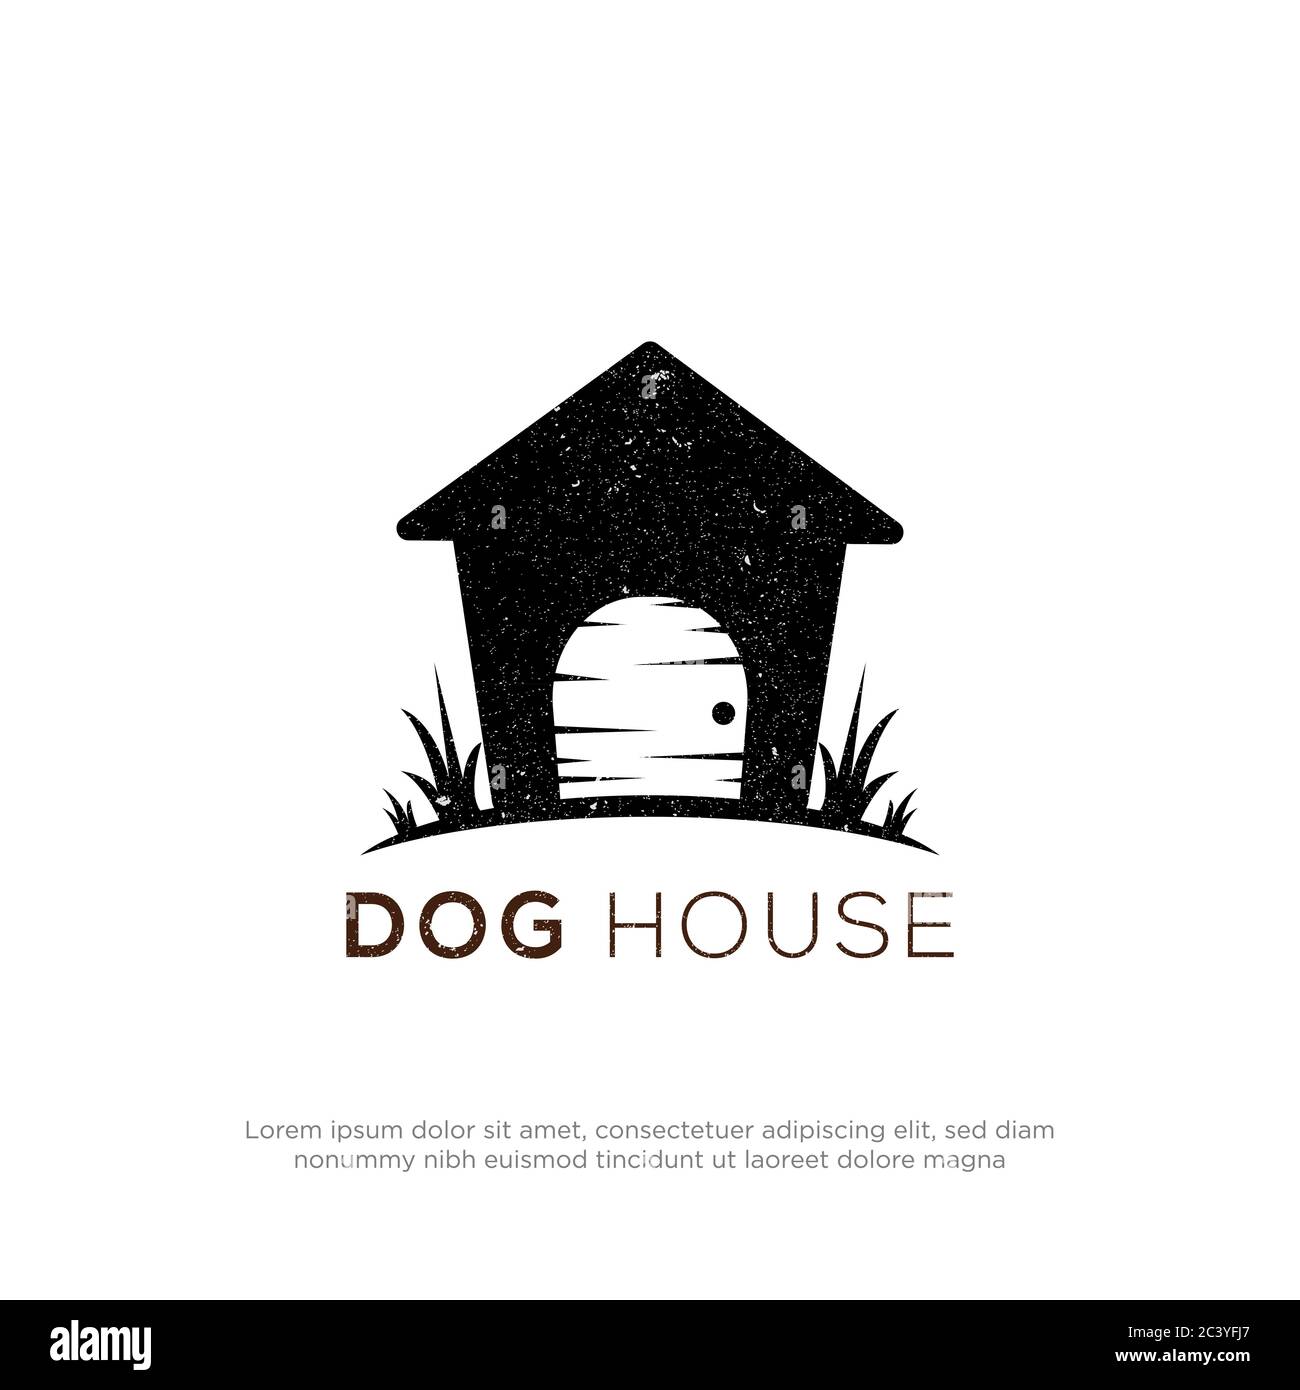 Rustic dog house logo inspiration, pet store logo design with ...